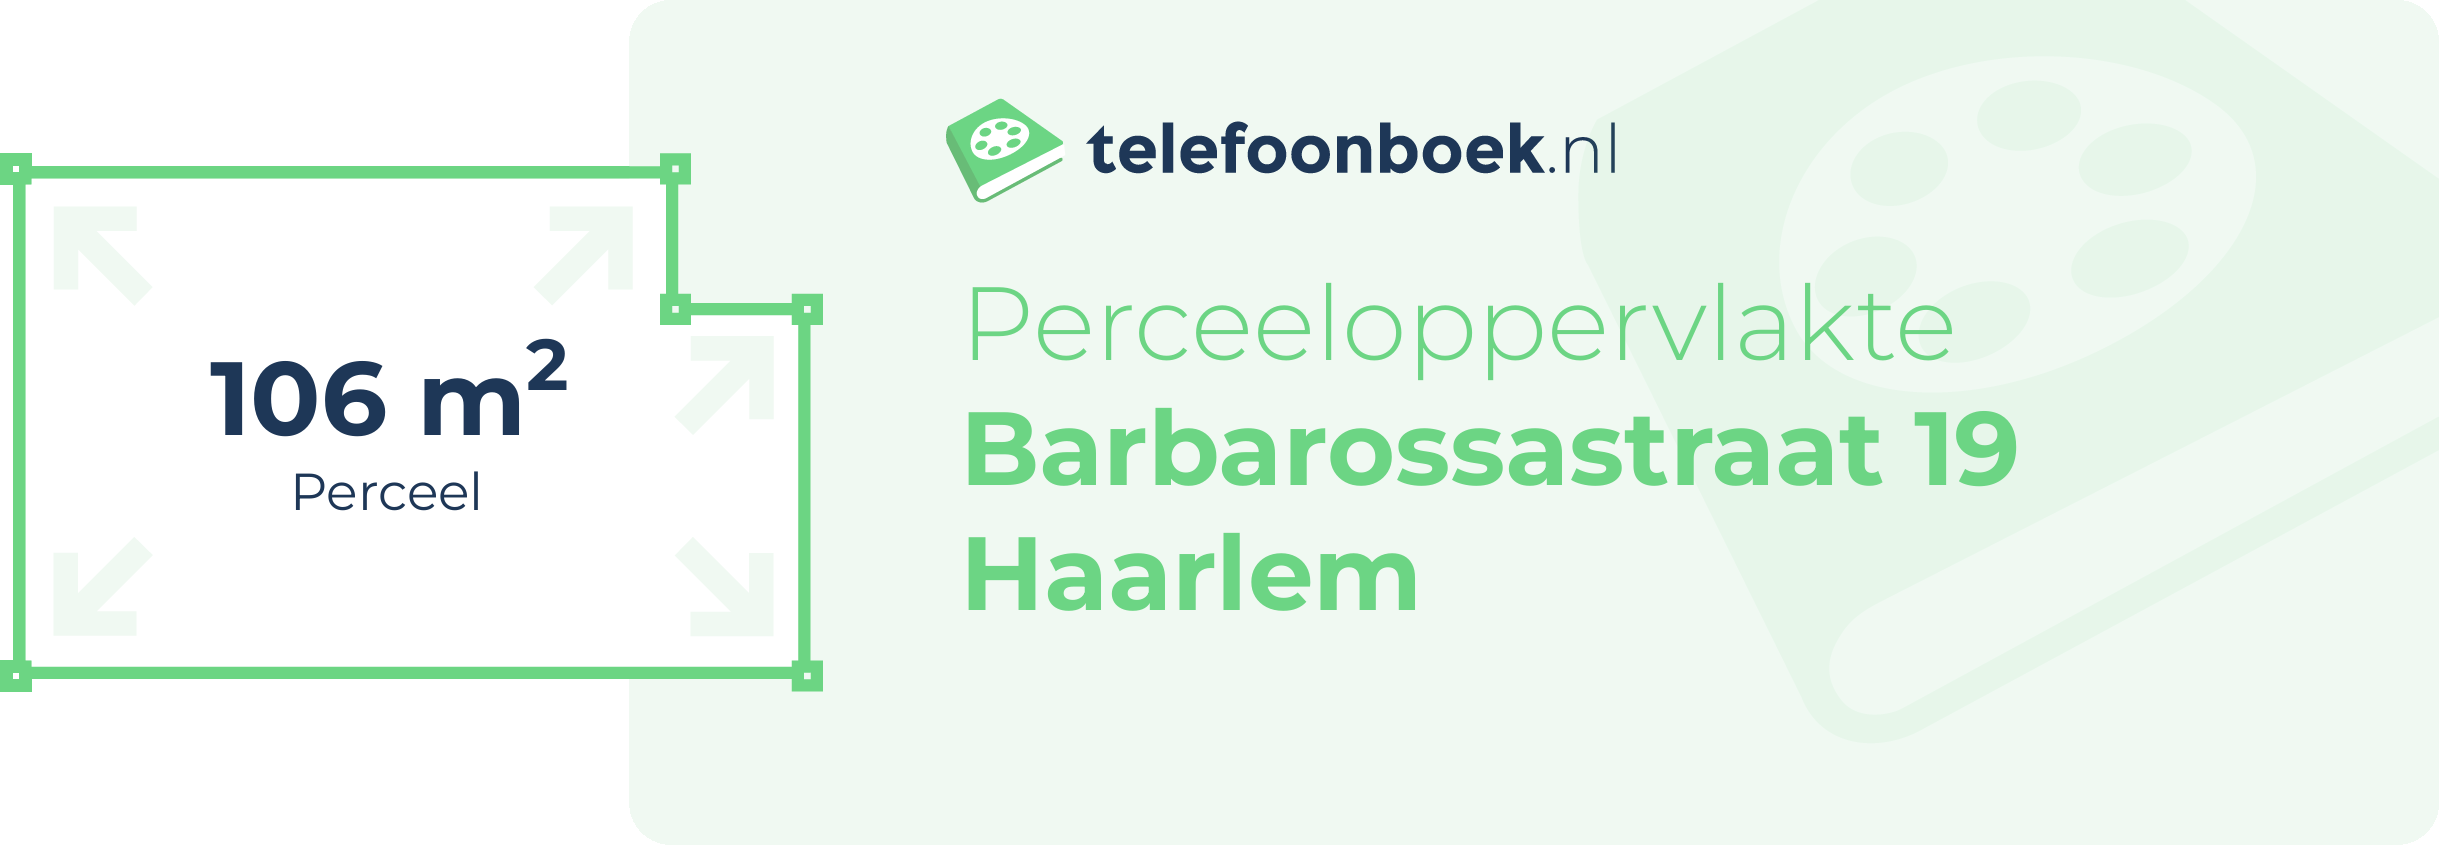 Perceeloppervlakte Barbarossastraat 19 Haarlem